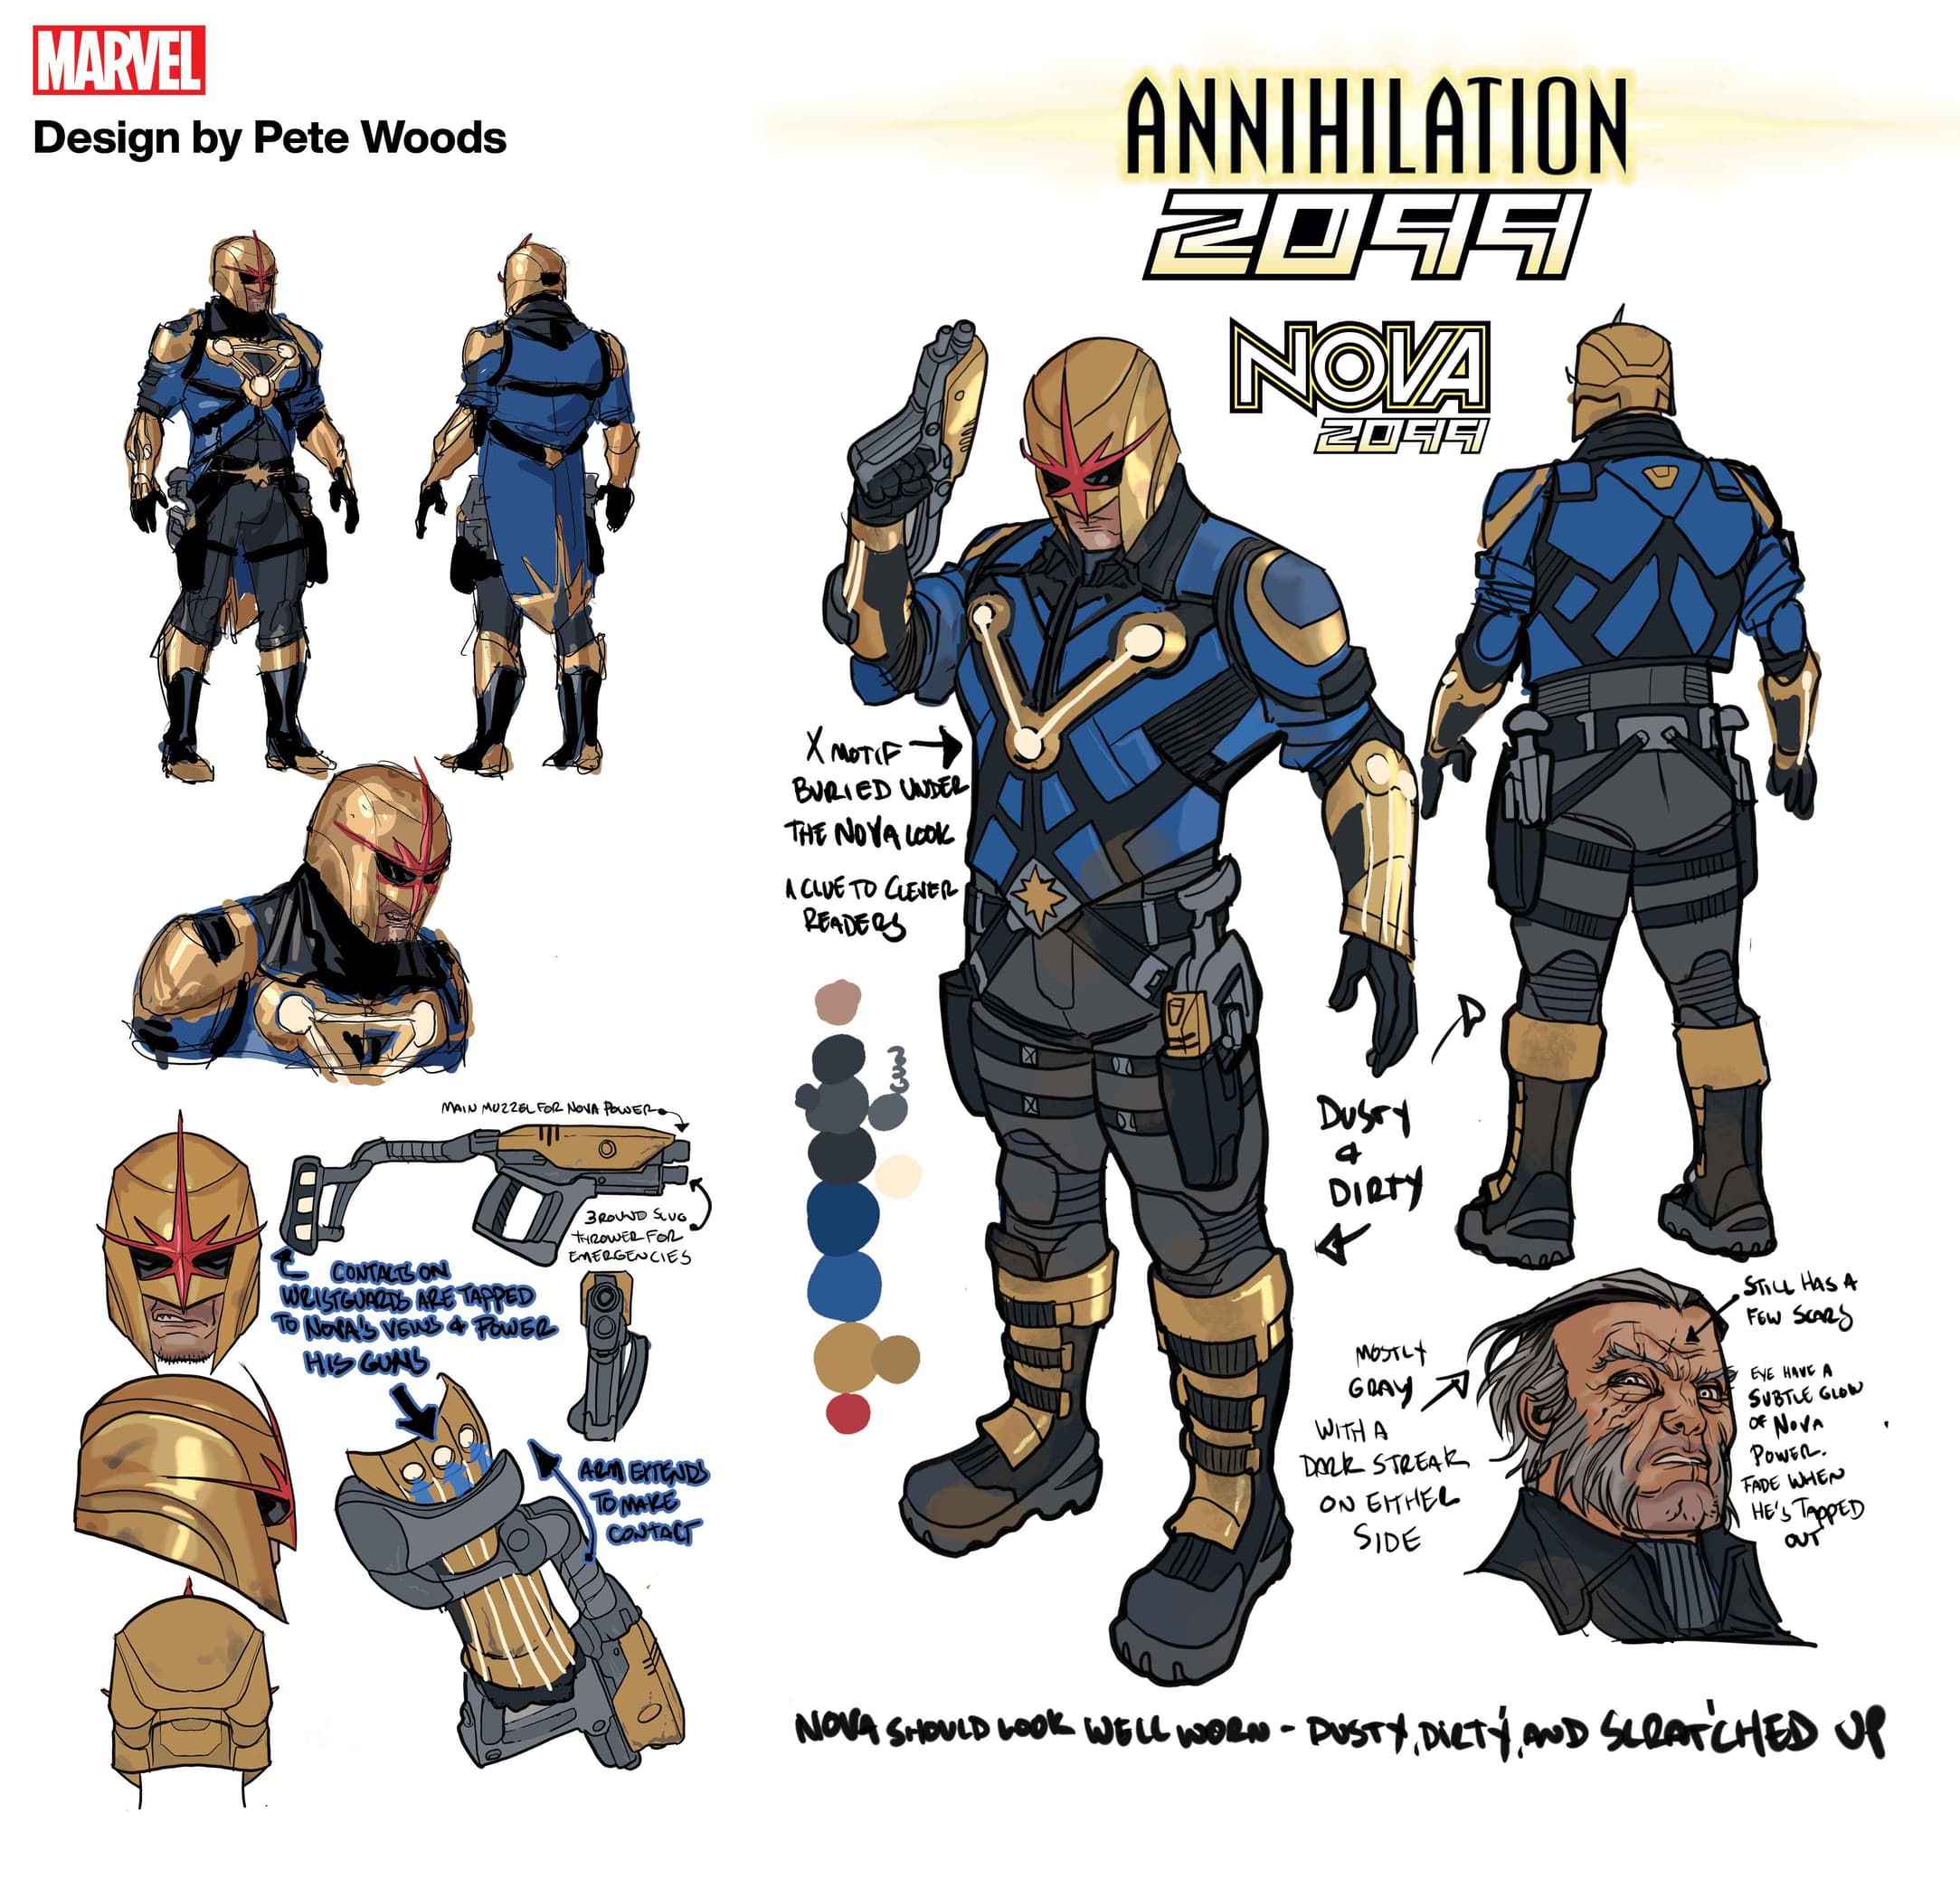 ANNIHILATION 2099: Wolverine as Nova 2099 design by Pete Woods